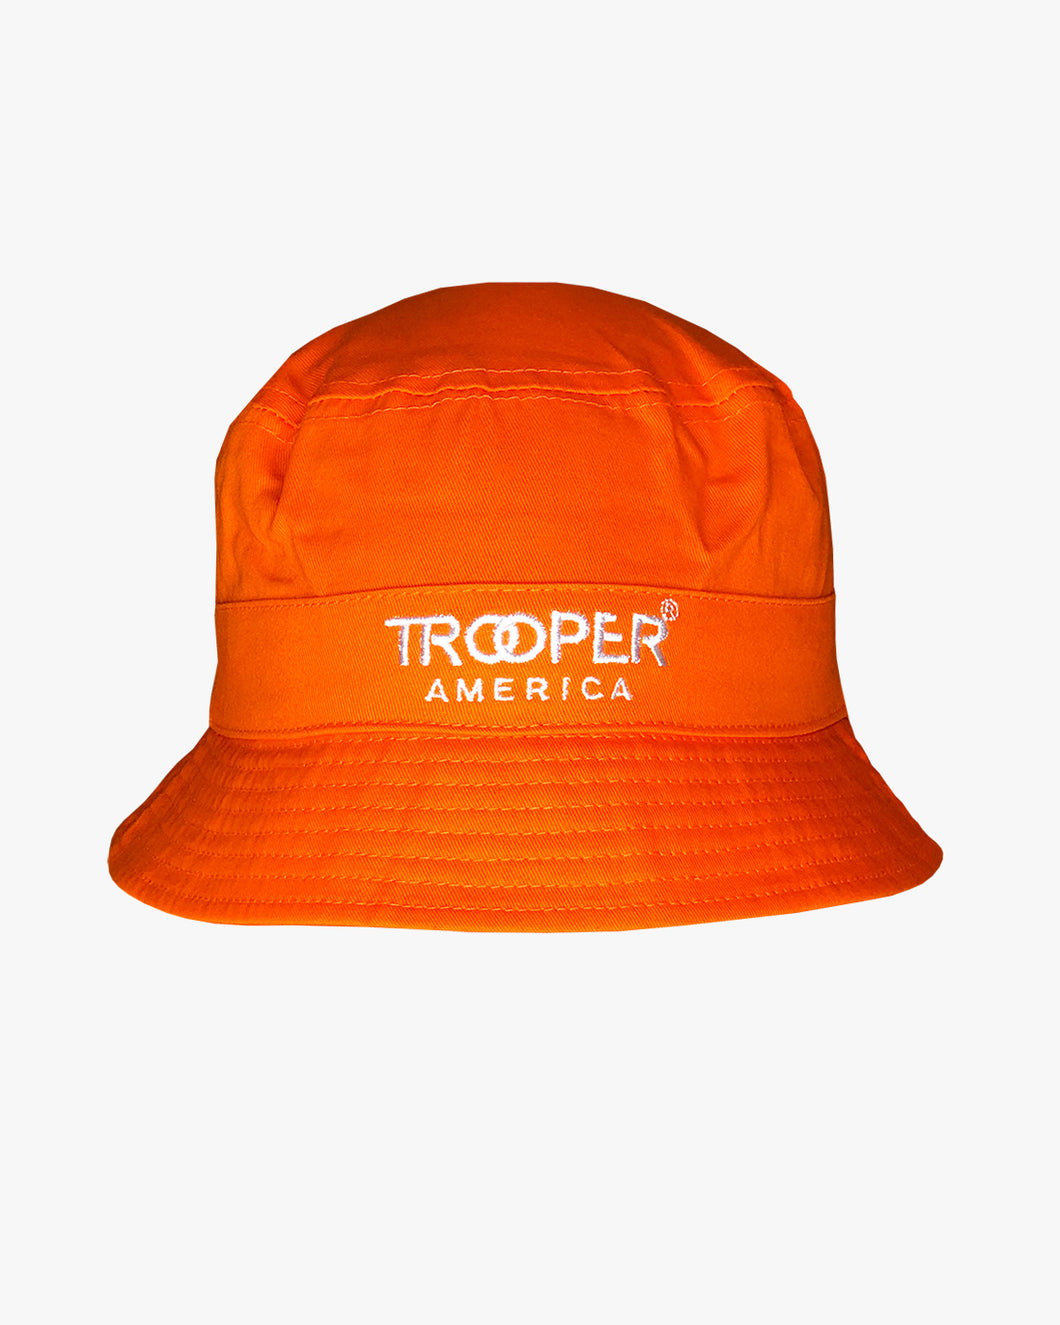 Bucket Hat in Orange | Trooper America Hat